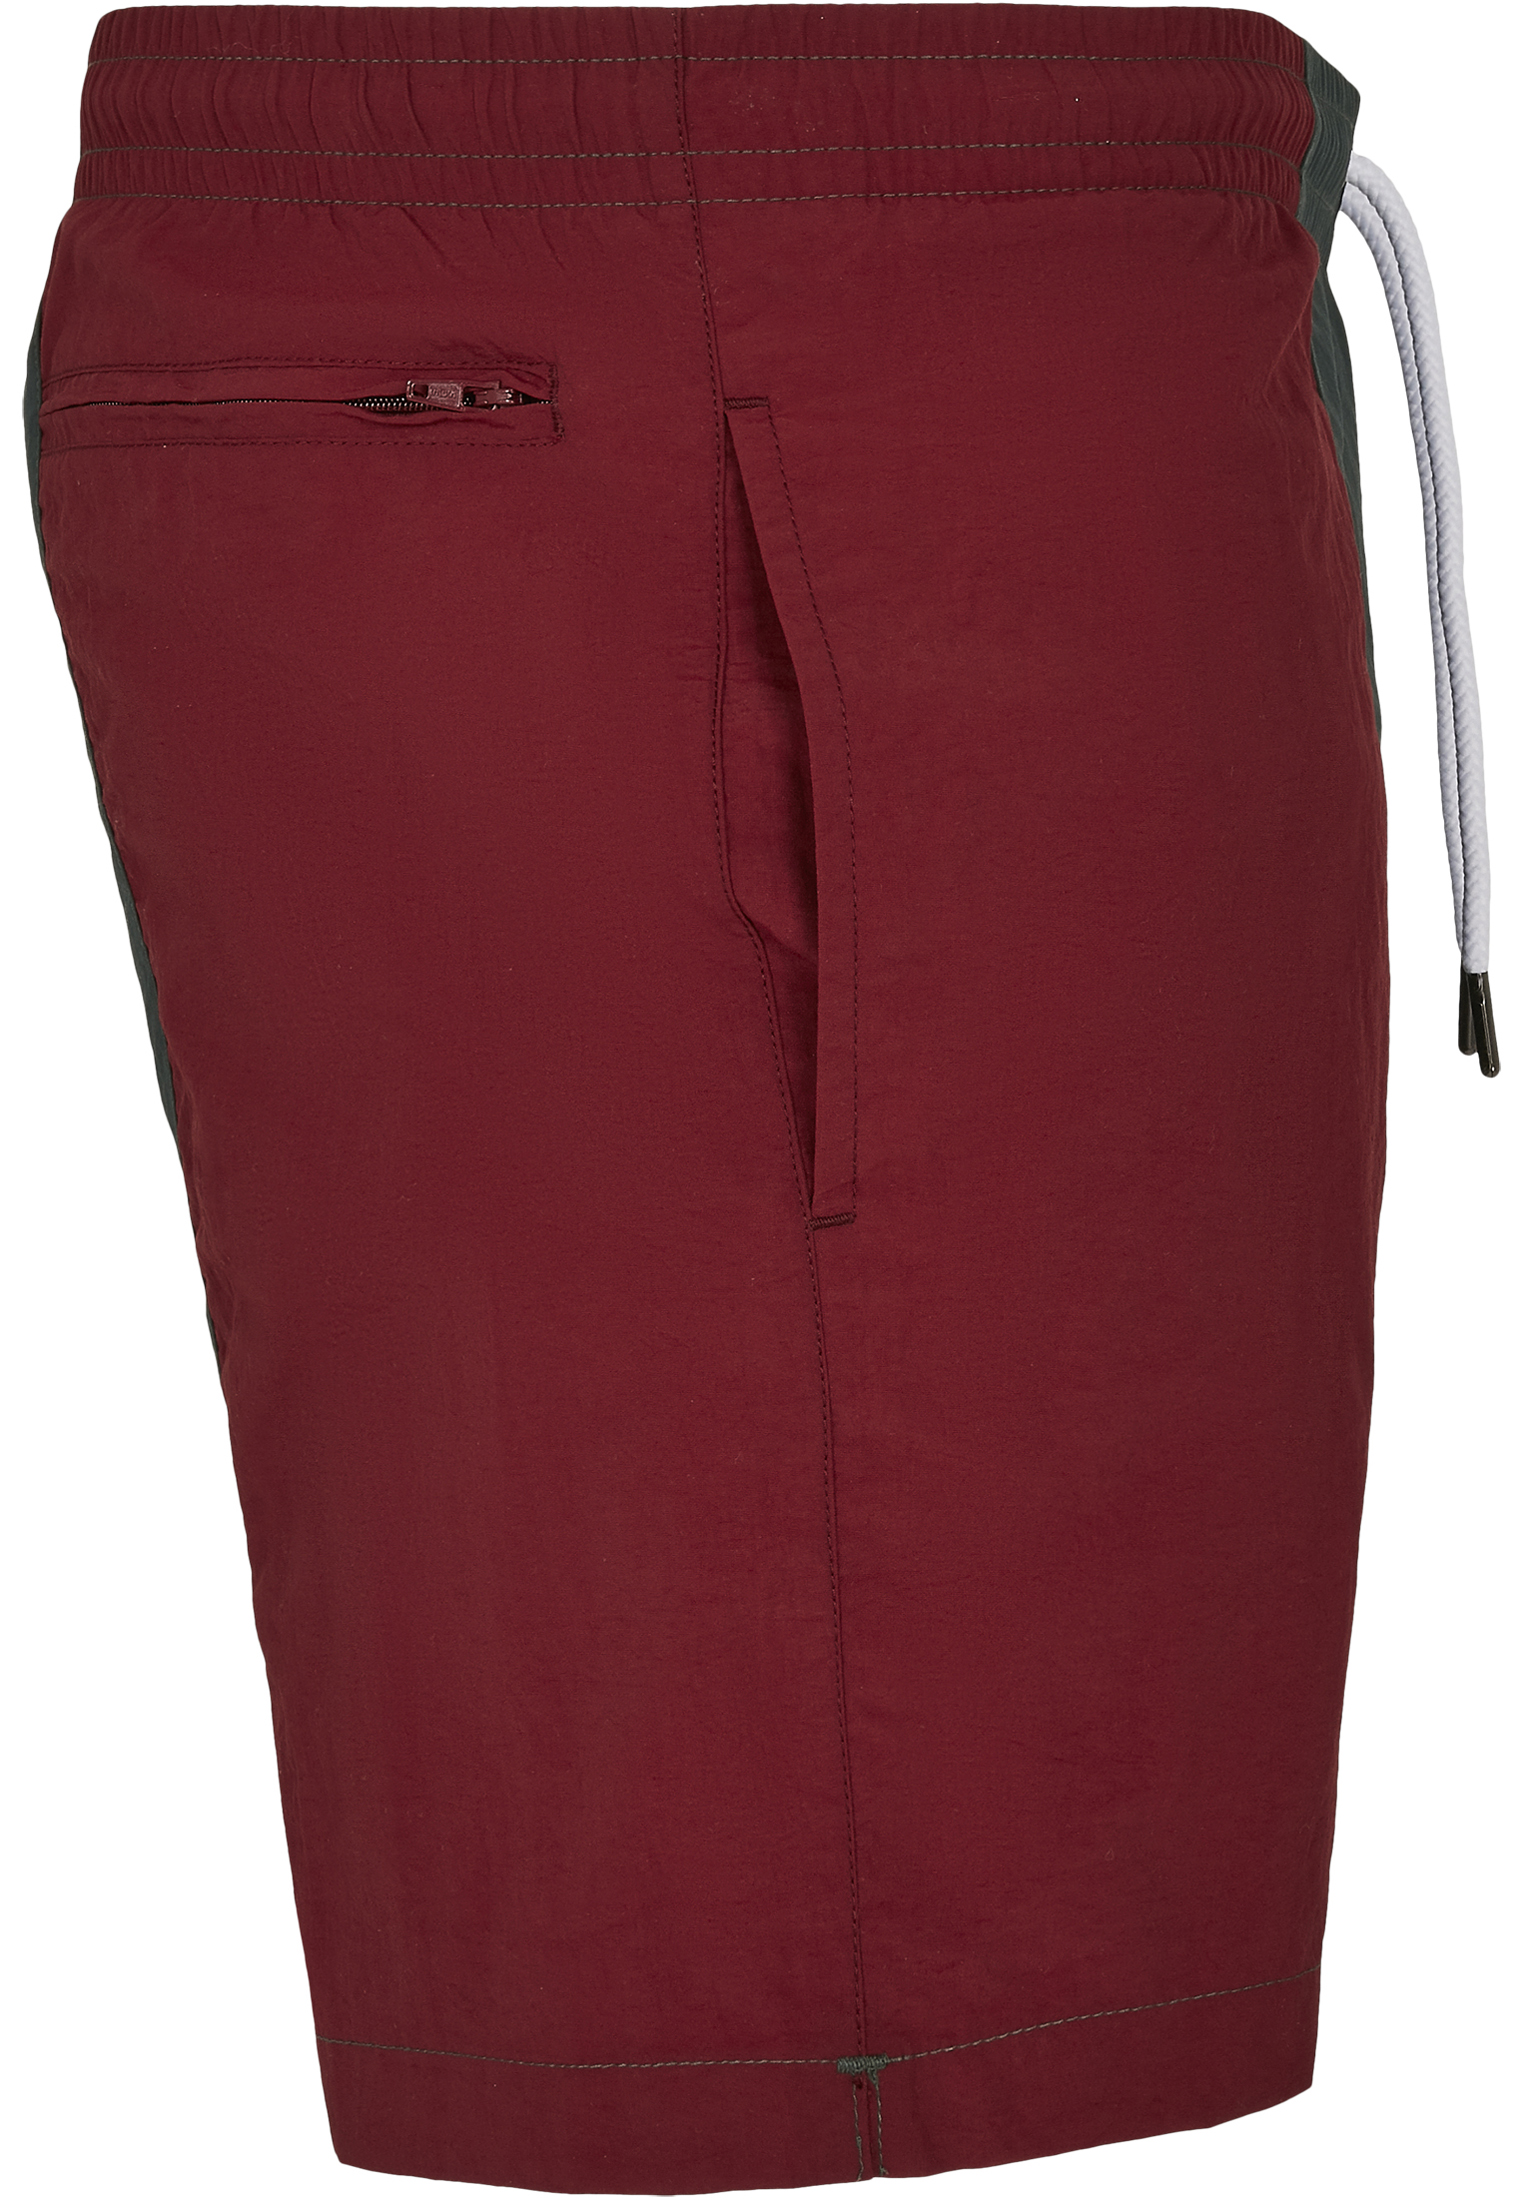 Bademode 3-Tone Swim Shorts in Farbe burgundy/bottlegreen